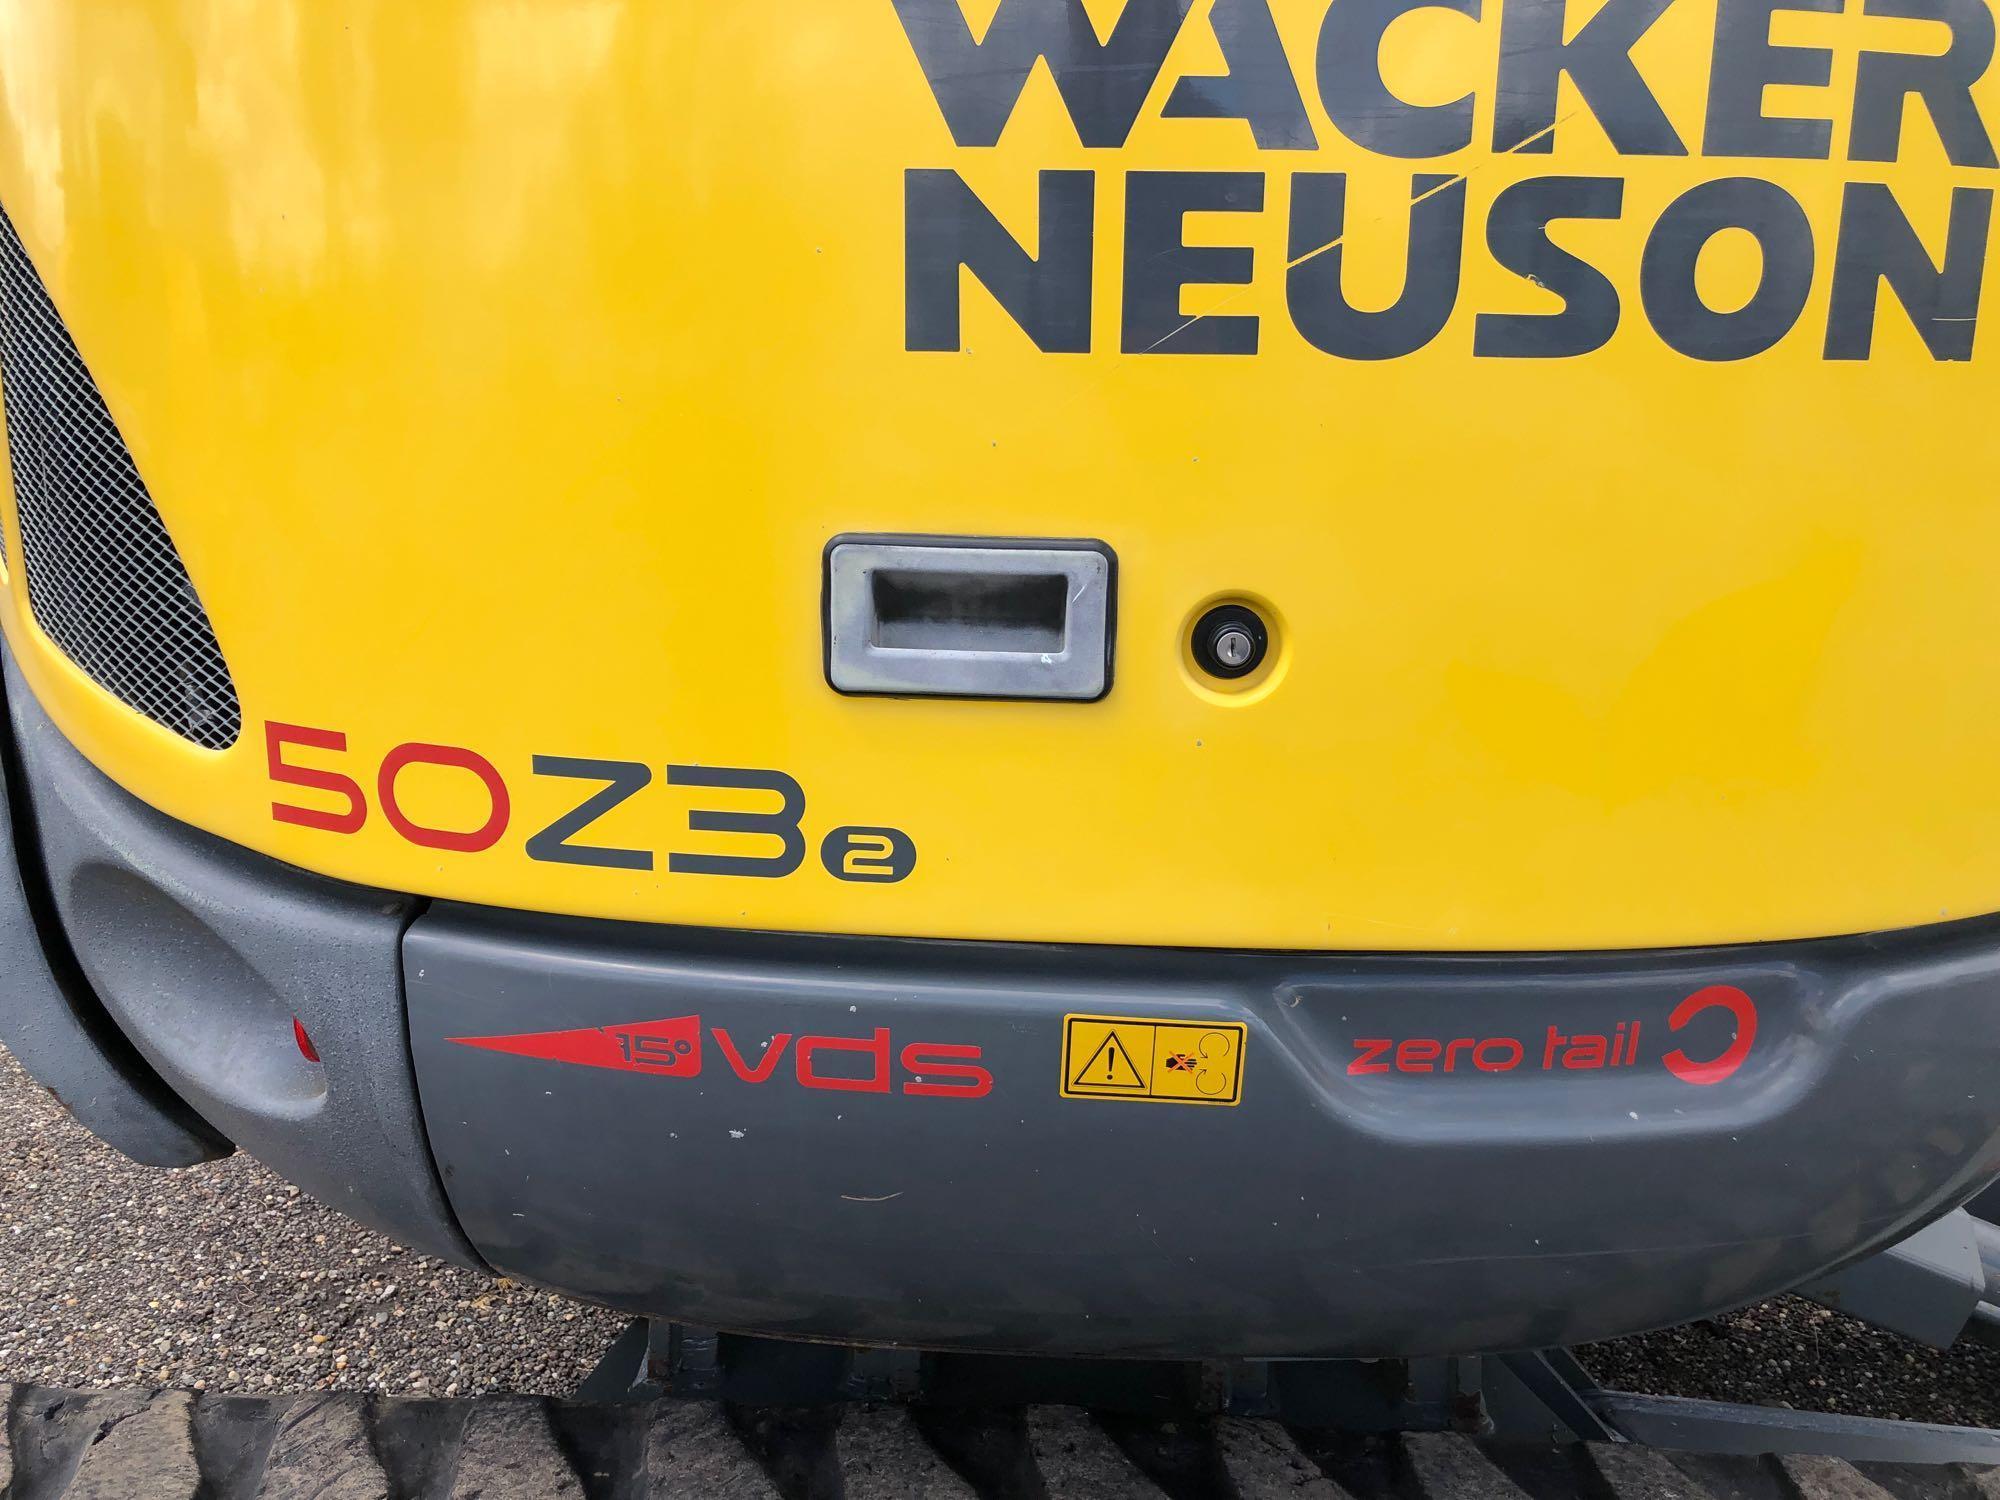 Wacker Neuson 50z3 2 excavator, Tilt angle cab, thumb and back blade, 2,276 hrs All 4 buckets